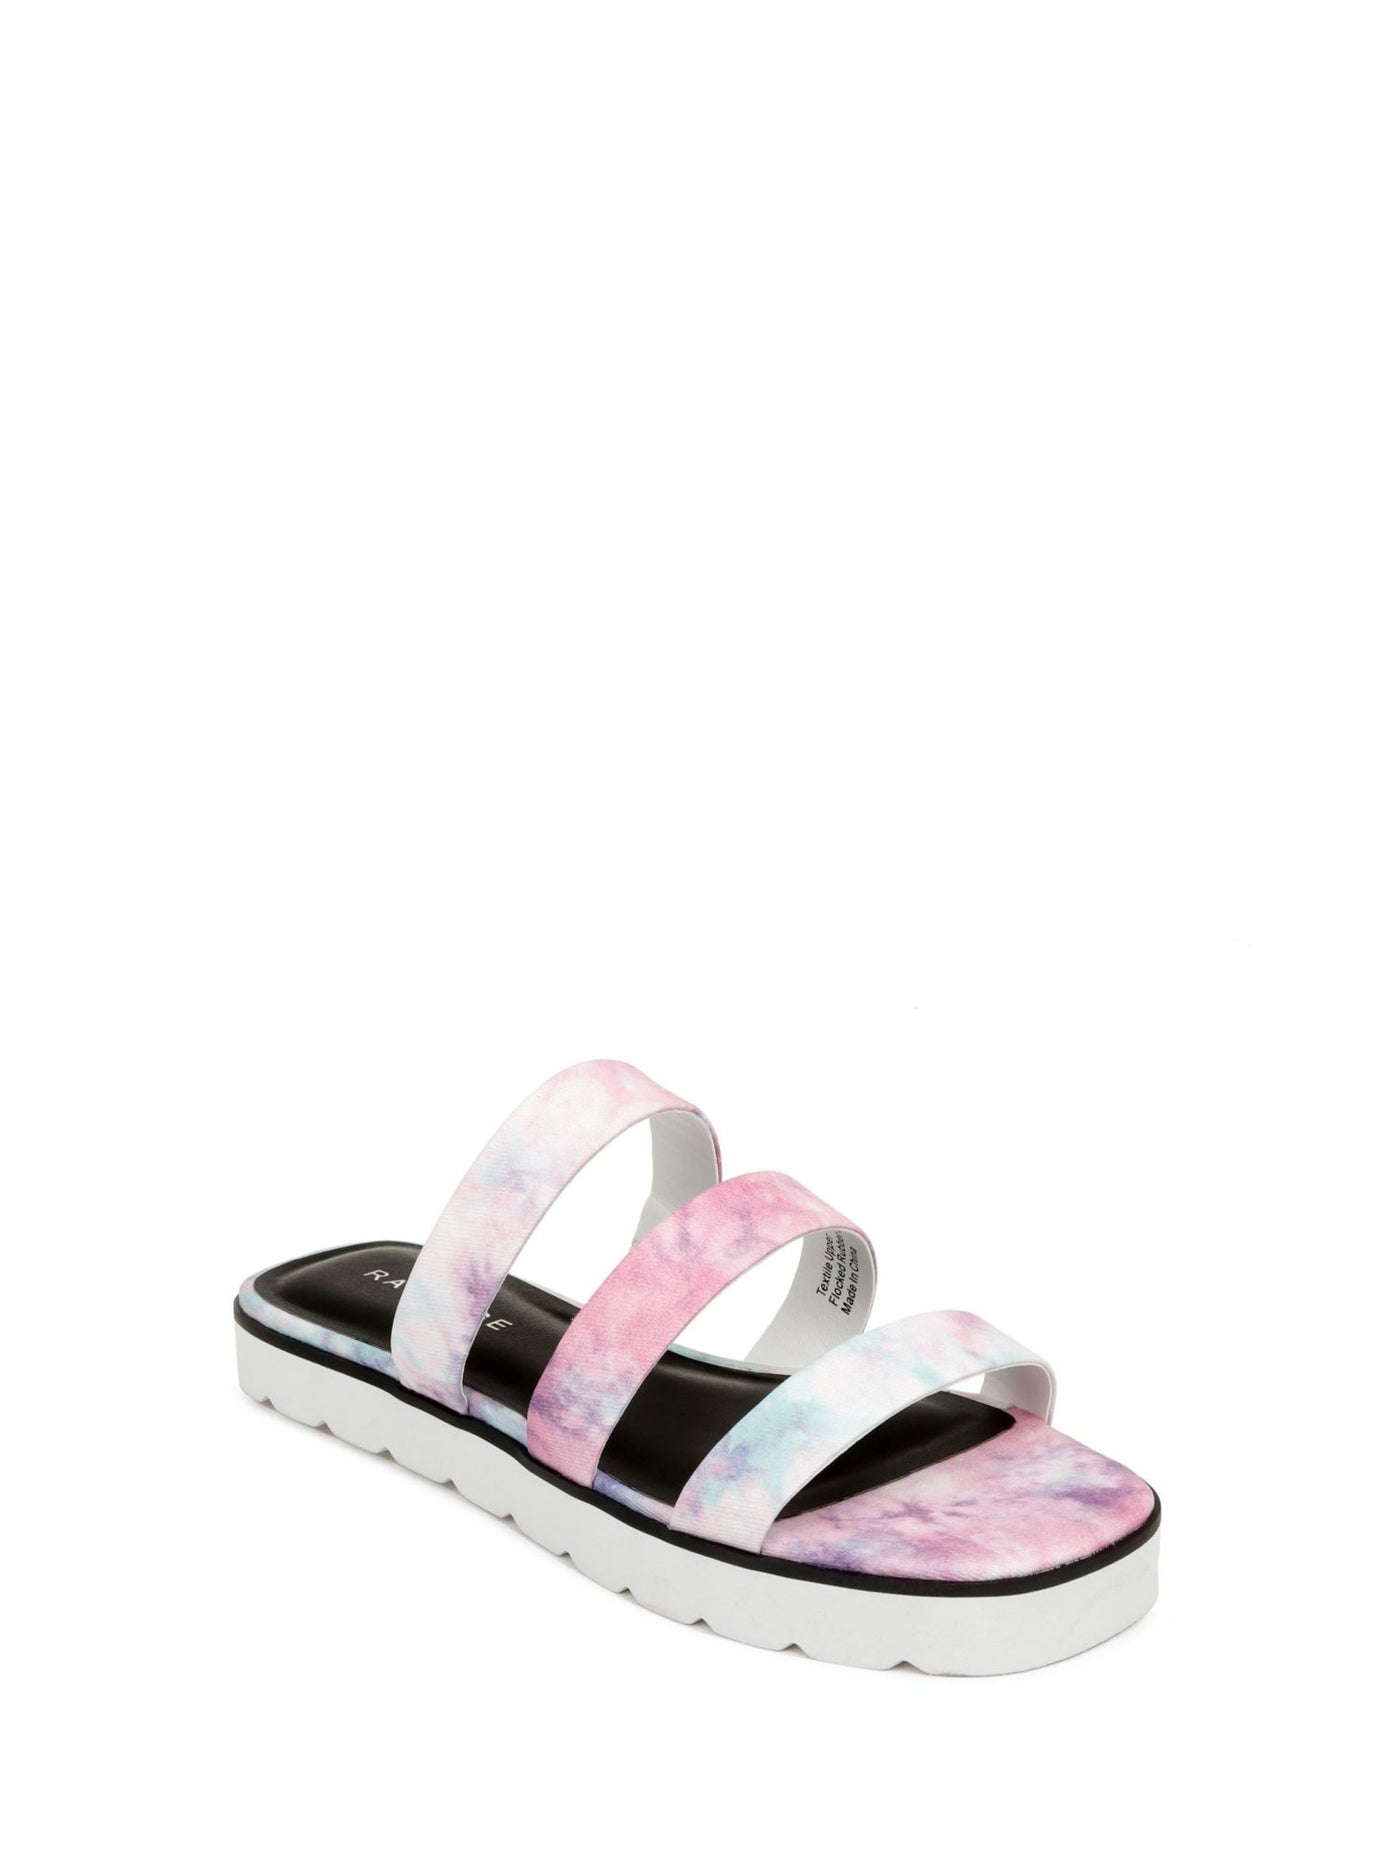 RAMPAGE Womens Pink Tie Dye Goring Padded Ally Round Toe Platform Slip On Slide Sandals Shoes 11 M